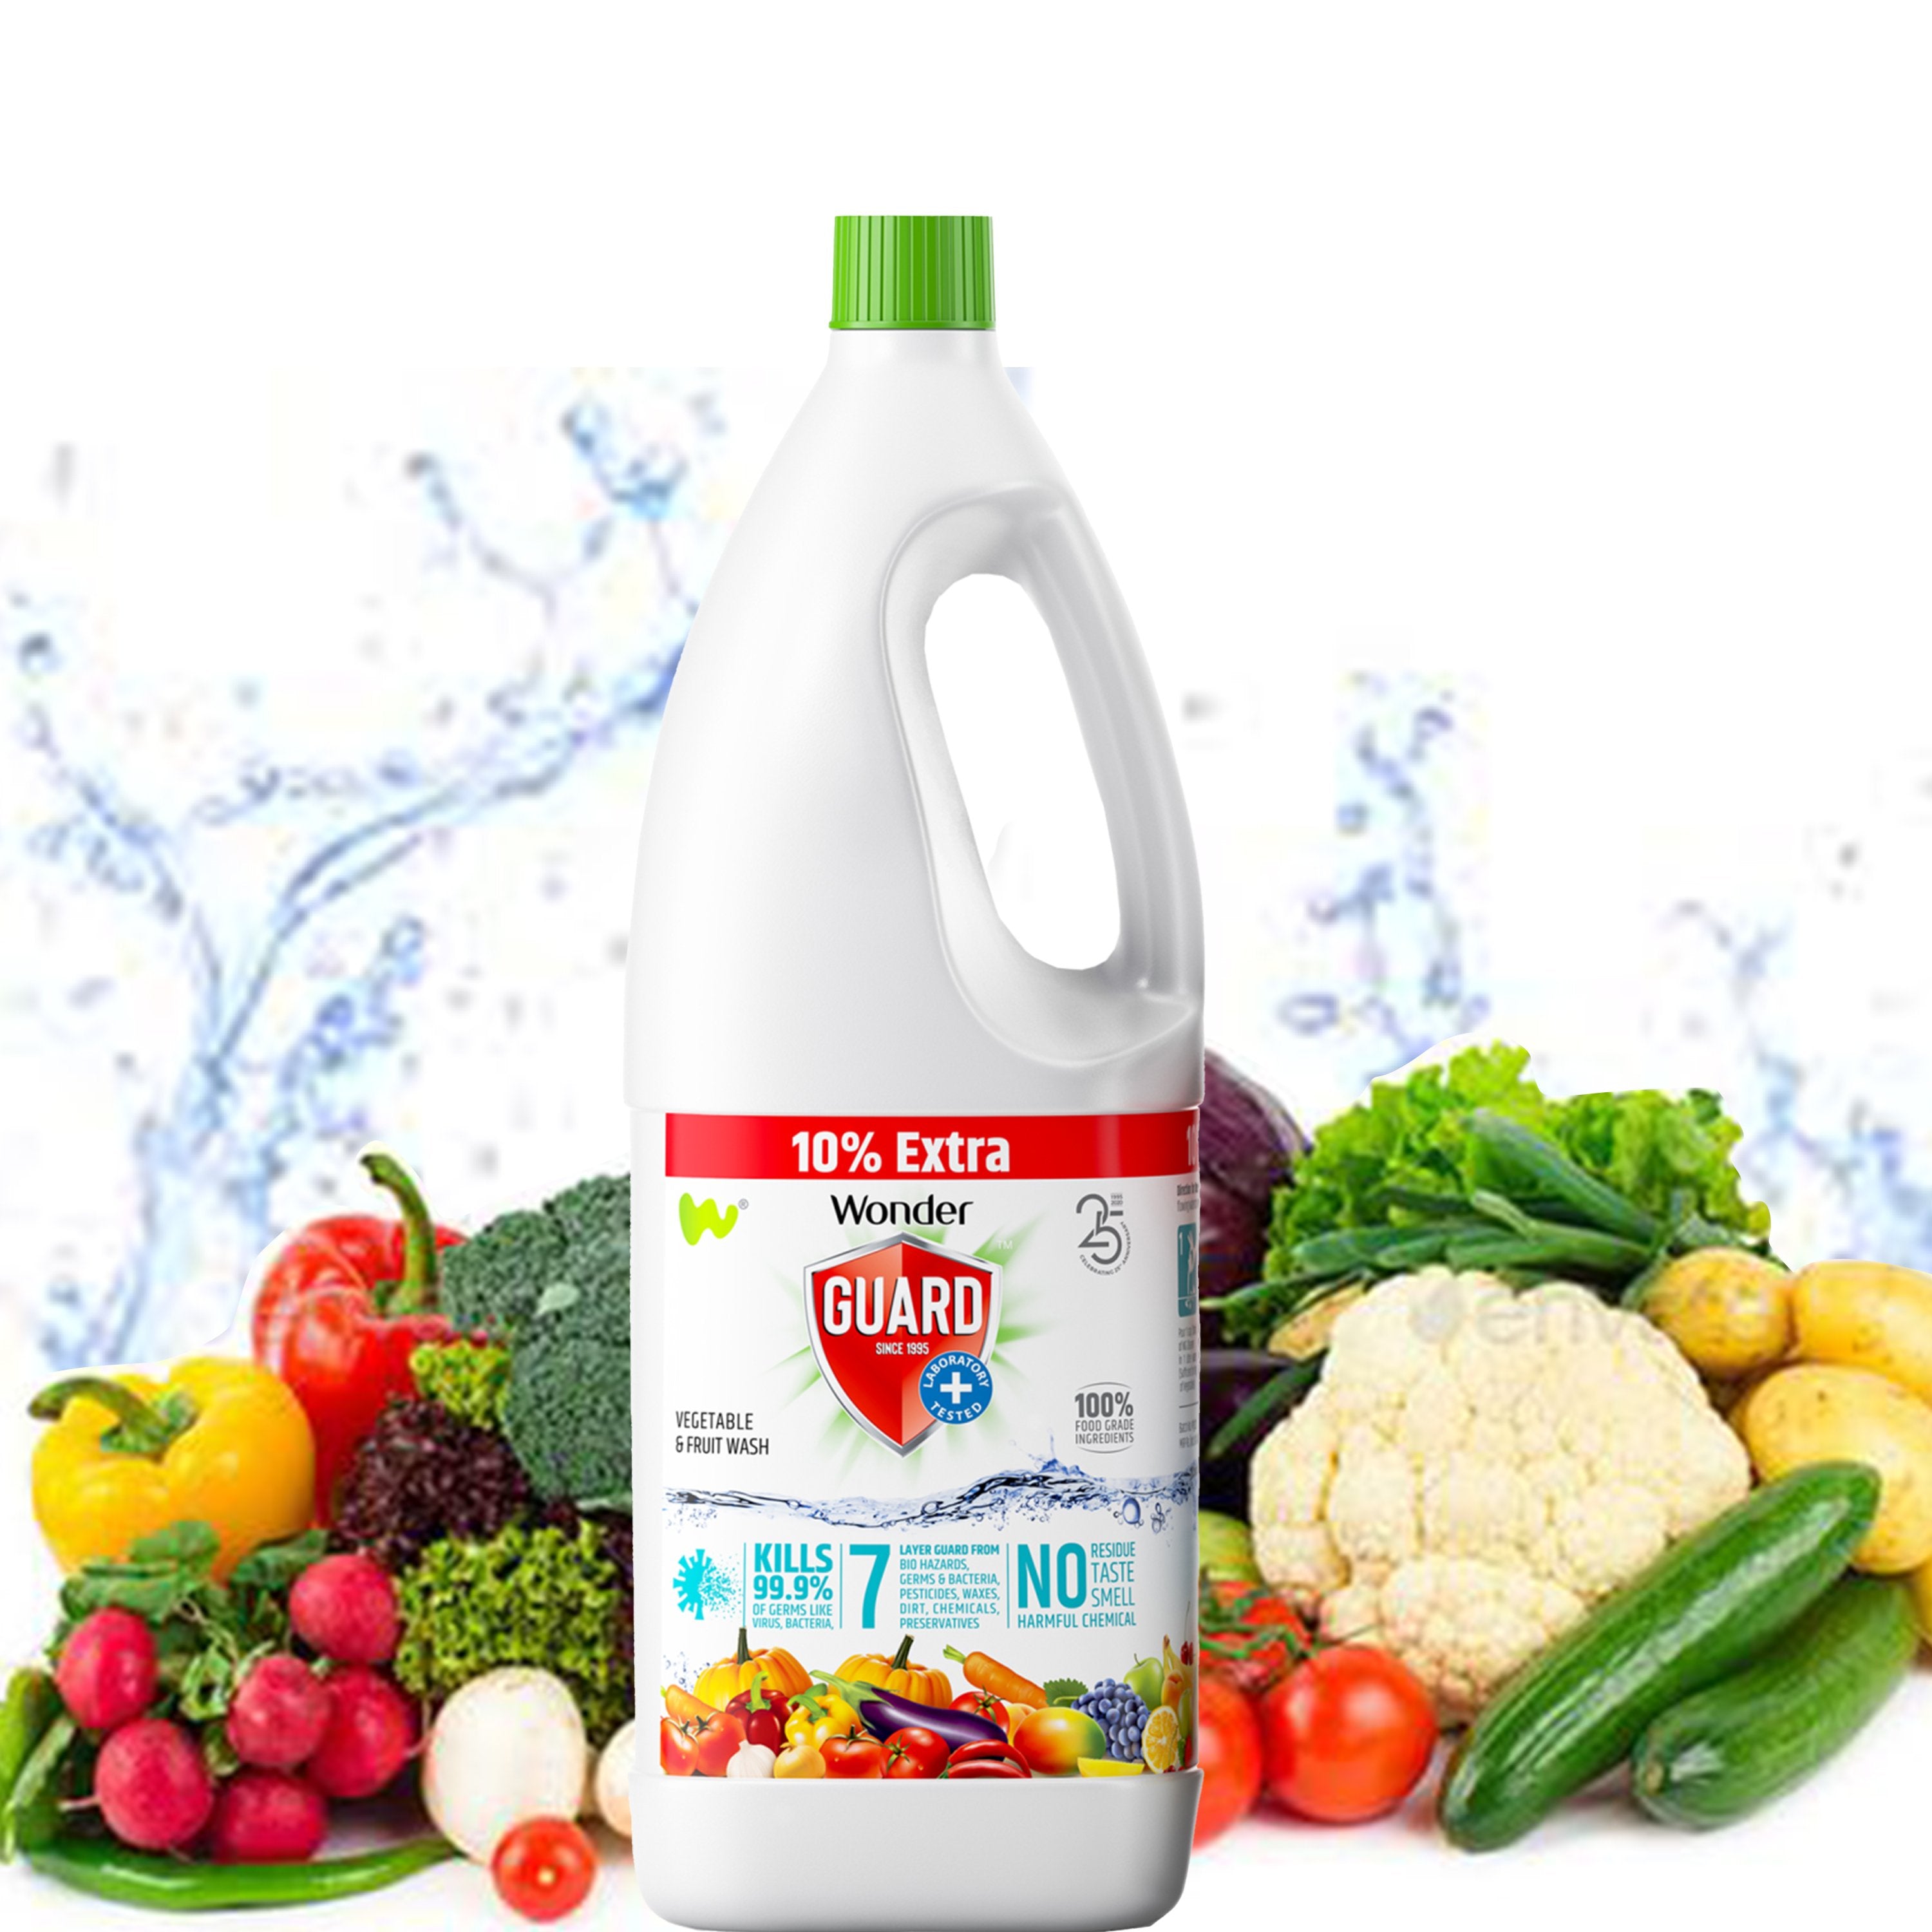 1332 Natural Vegetable & Fruit Wash Liquid (525 ml) - SkyShopy